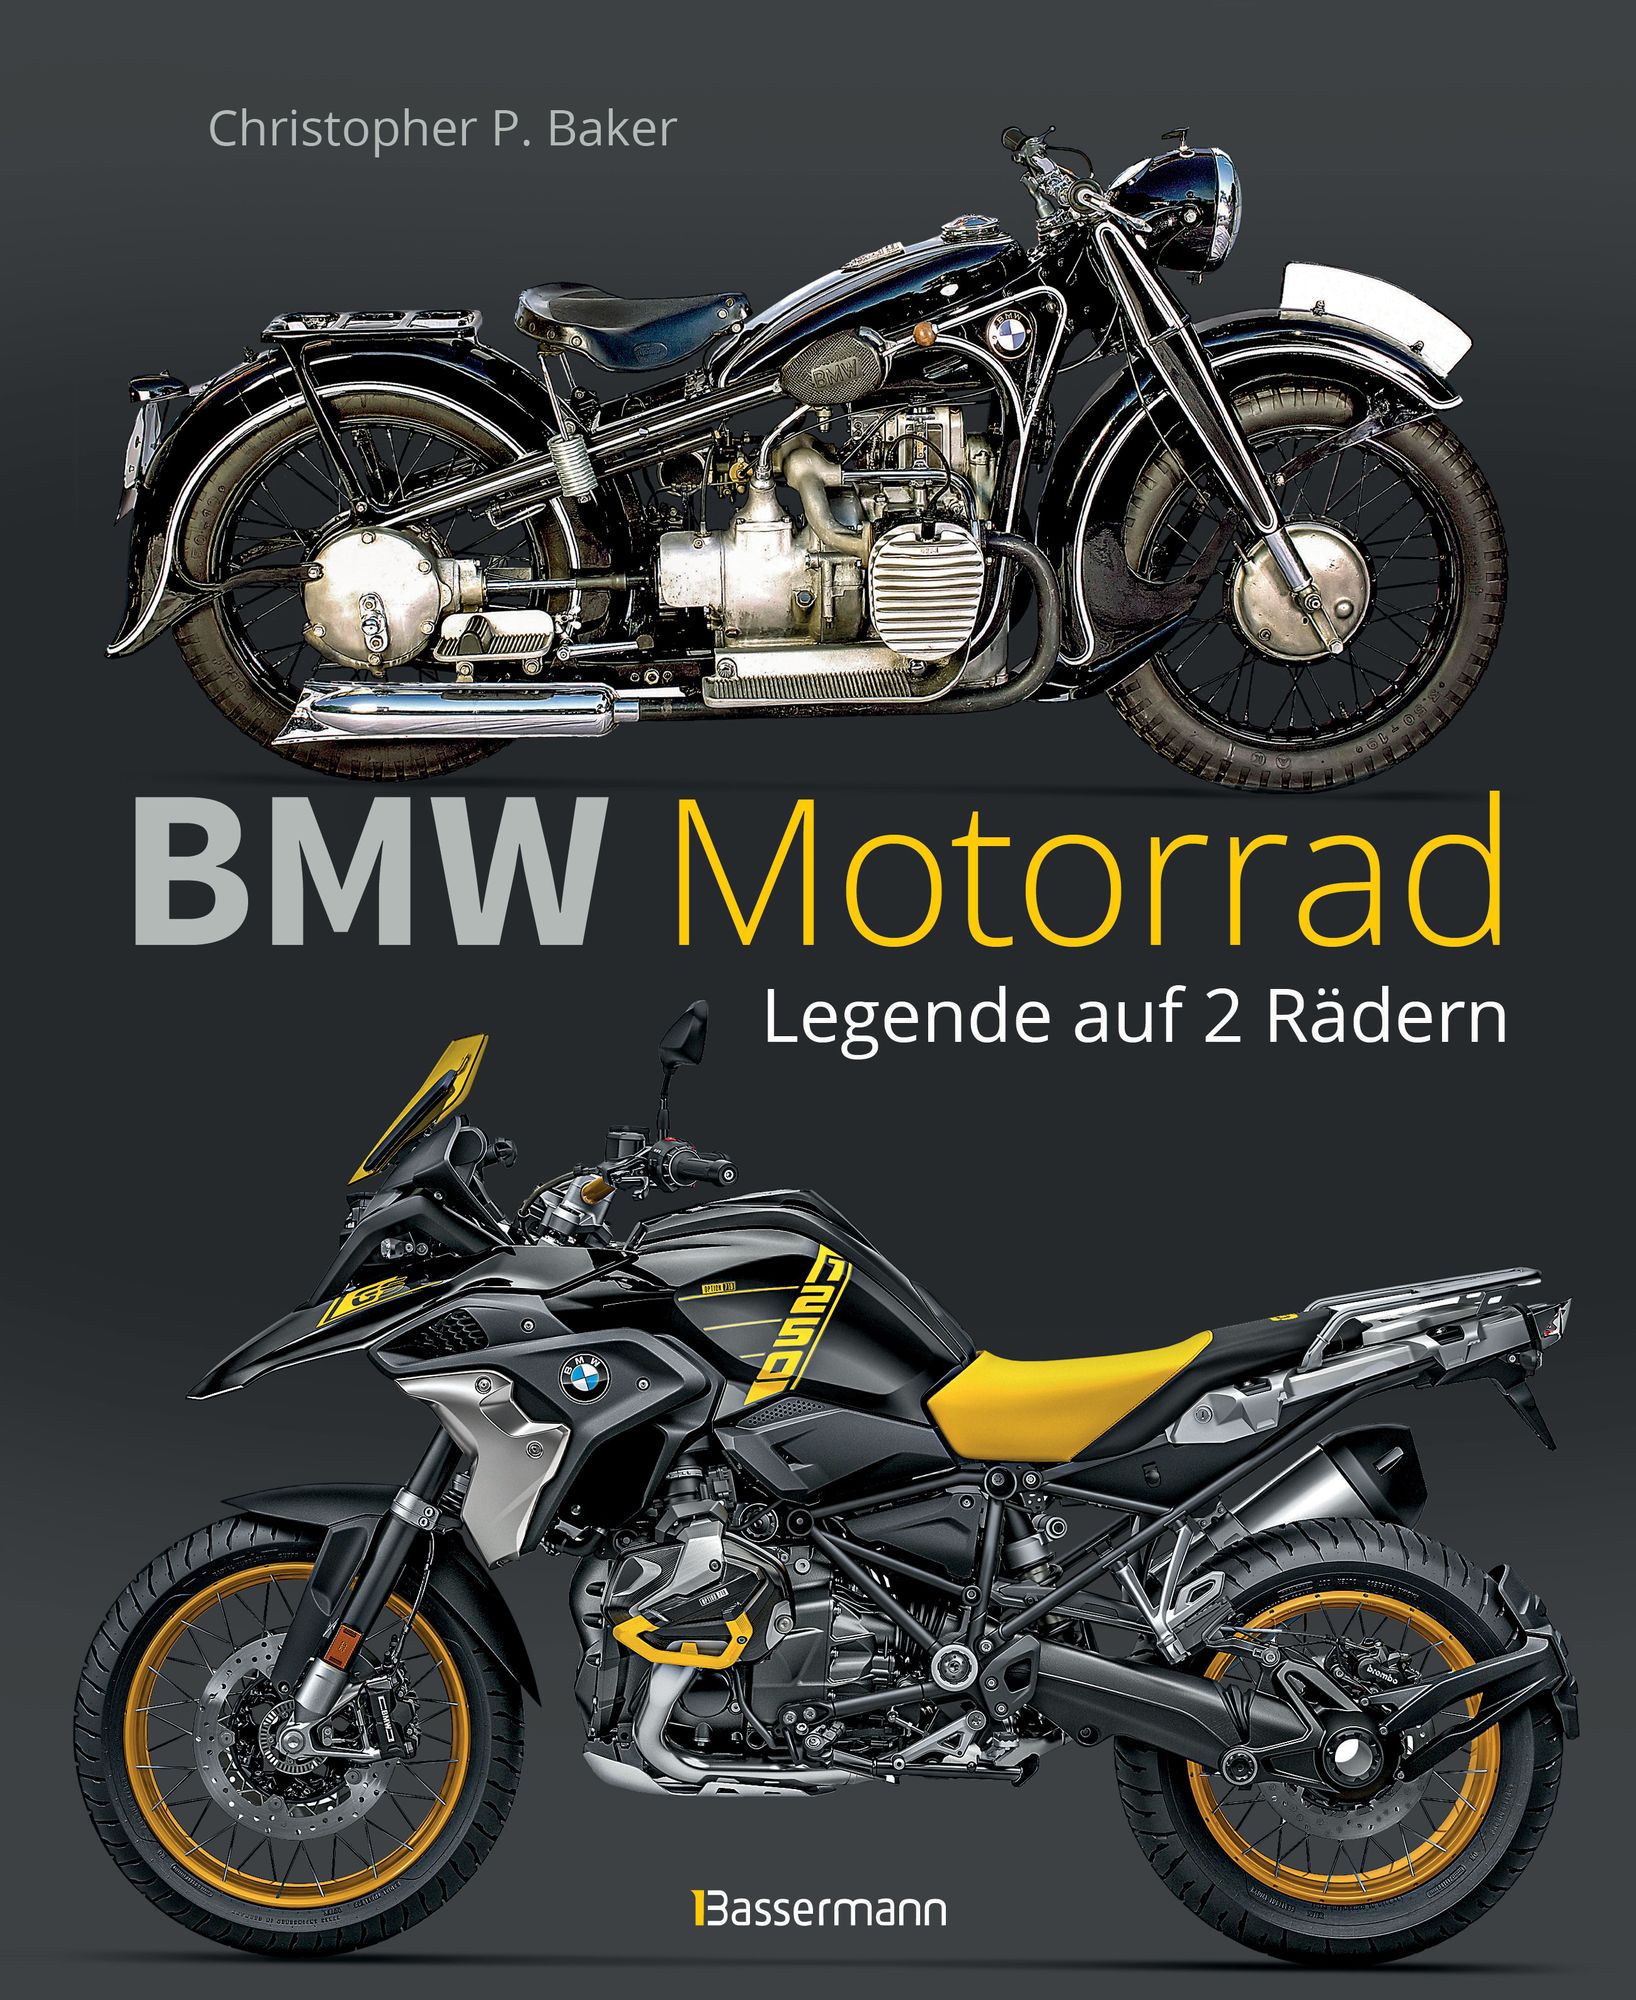 BMW Motorrad bei bücher.de bestellen